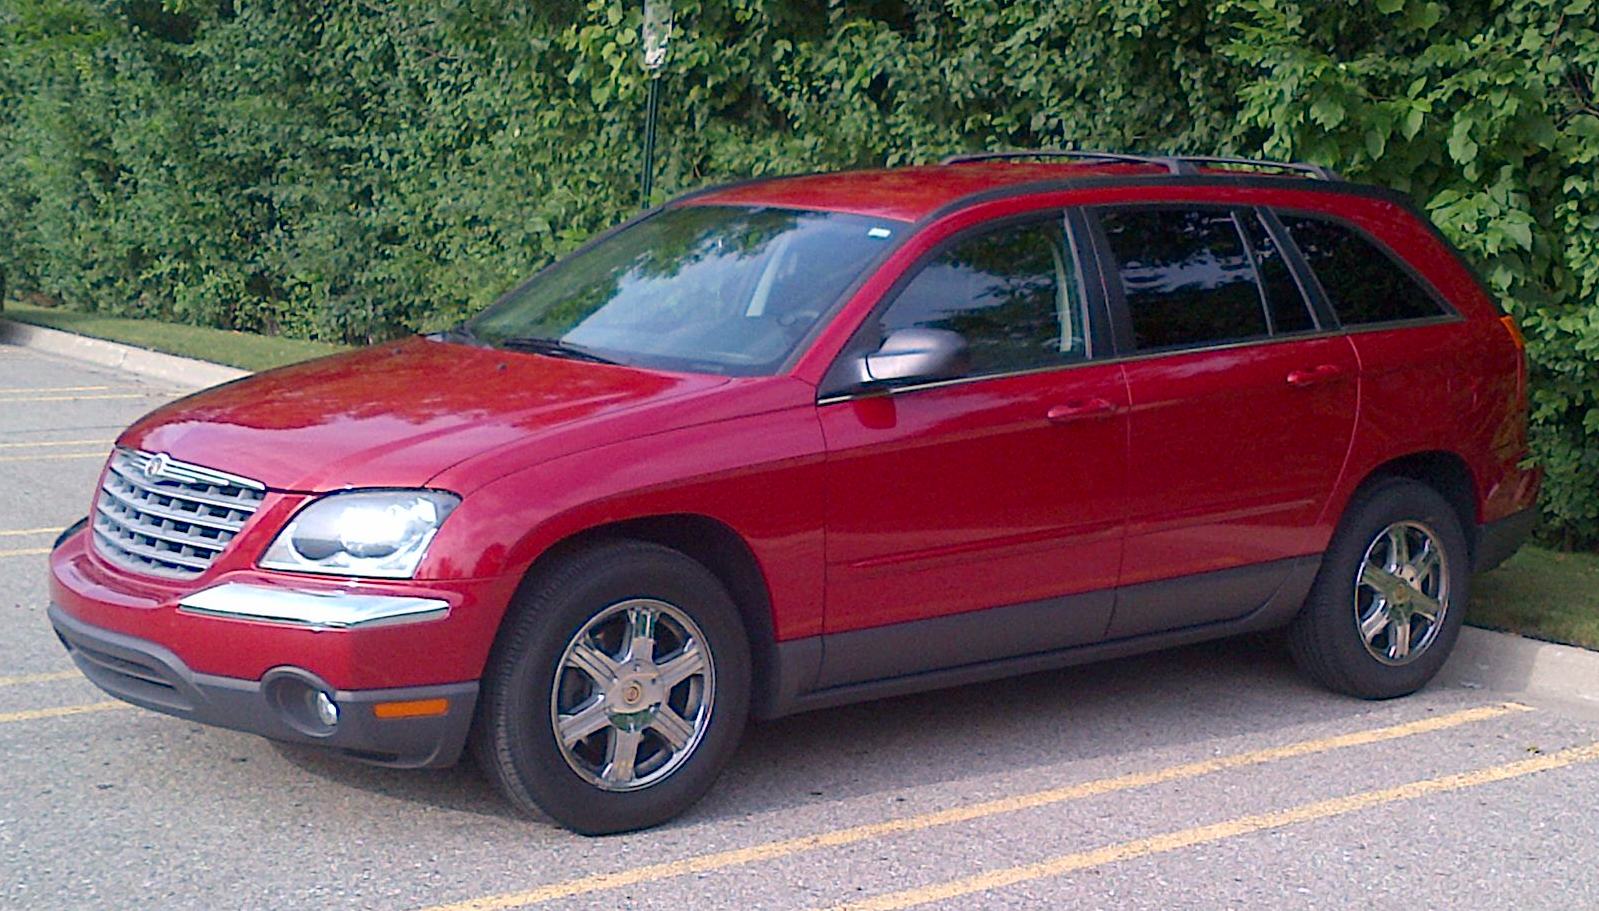 Chrysler Pacifica 2004